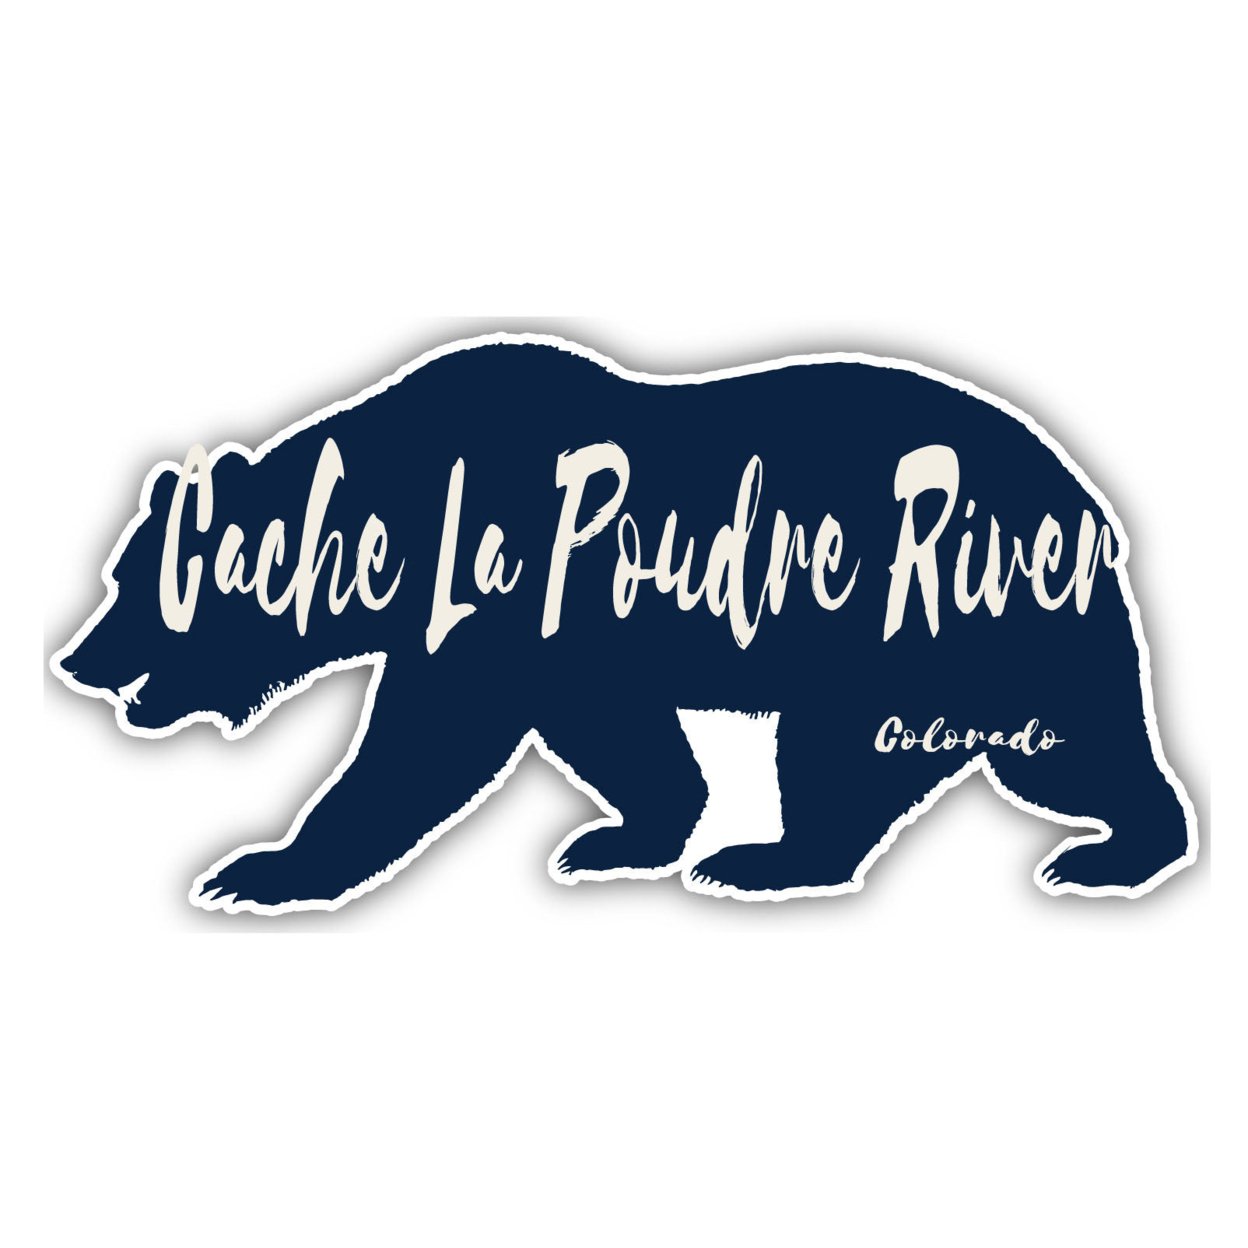 Cache La Poudre River Colorado Souvenir Decorative Stickers (Choose Theme And Size) - Single Unit, 6-Inch, Tent